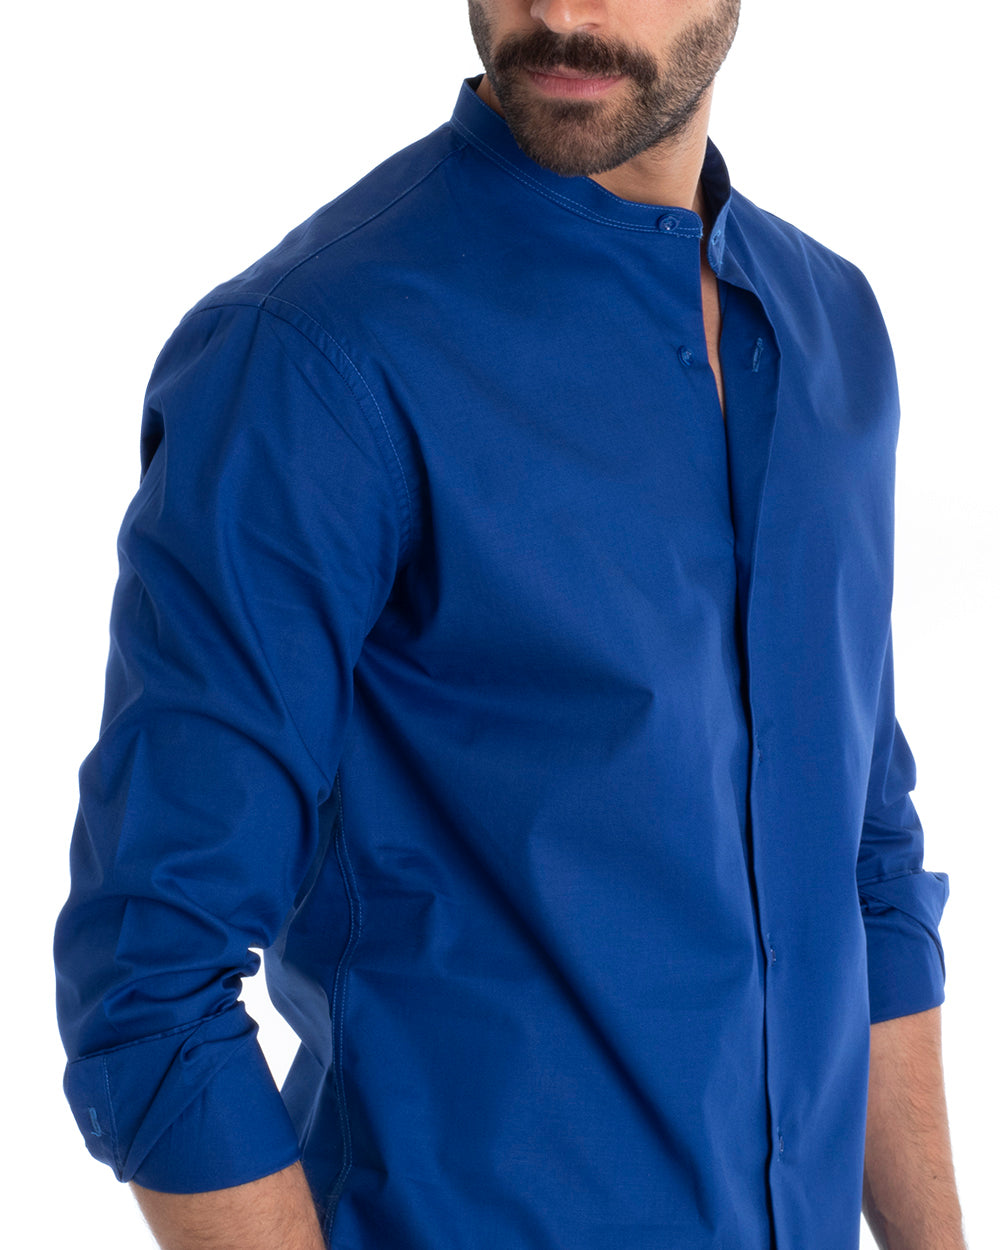 Camicia Uomo Sartoriale Collo Coreano Manica Lunga Basic Cotone Morbido Blu Royal Regular Fit GIOSAL-C2370A